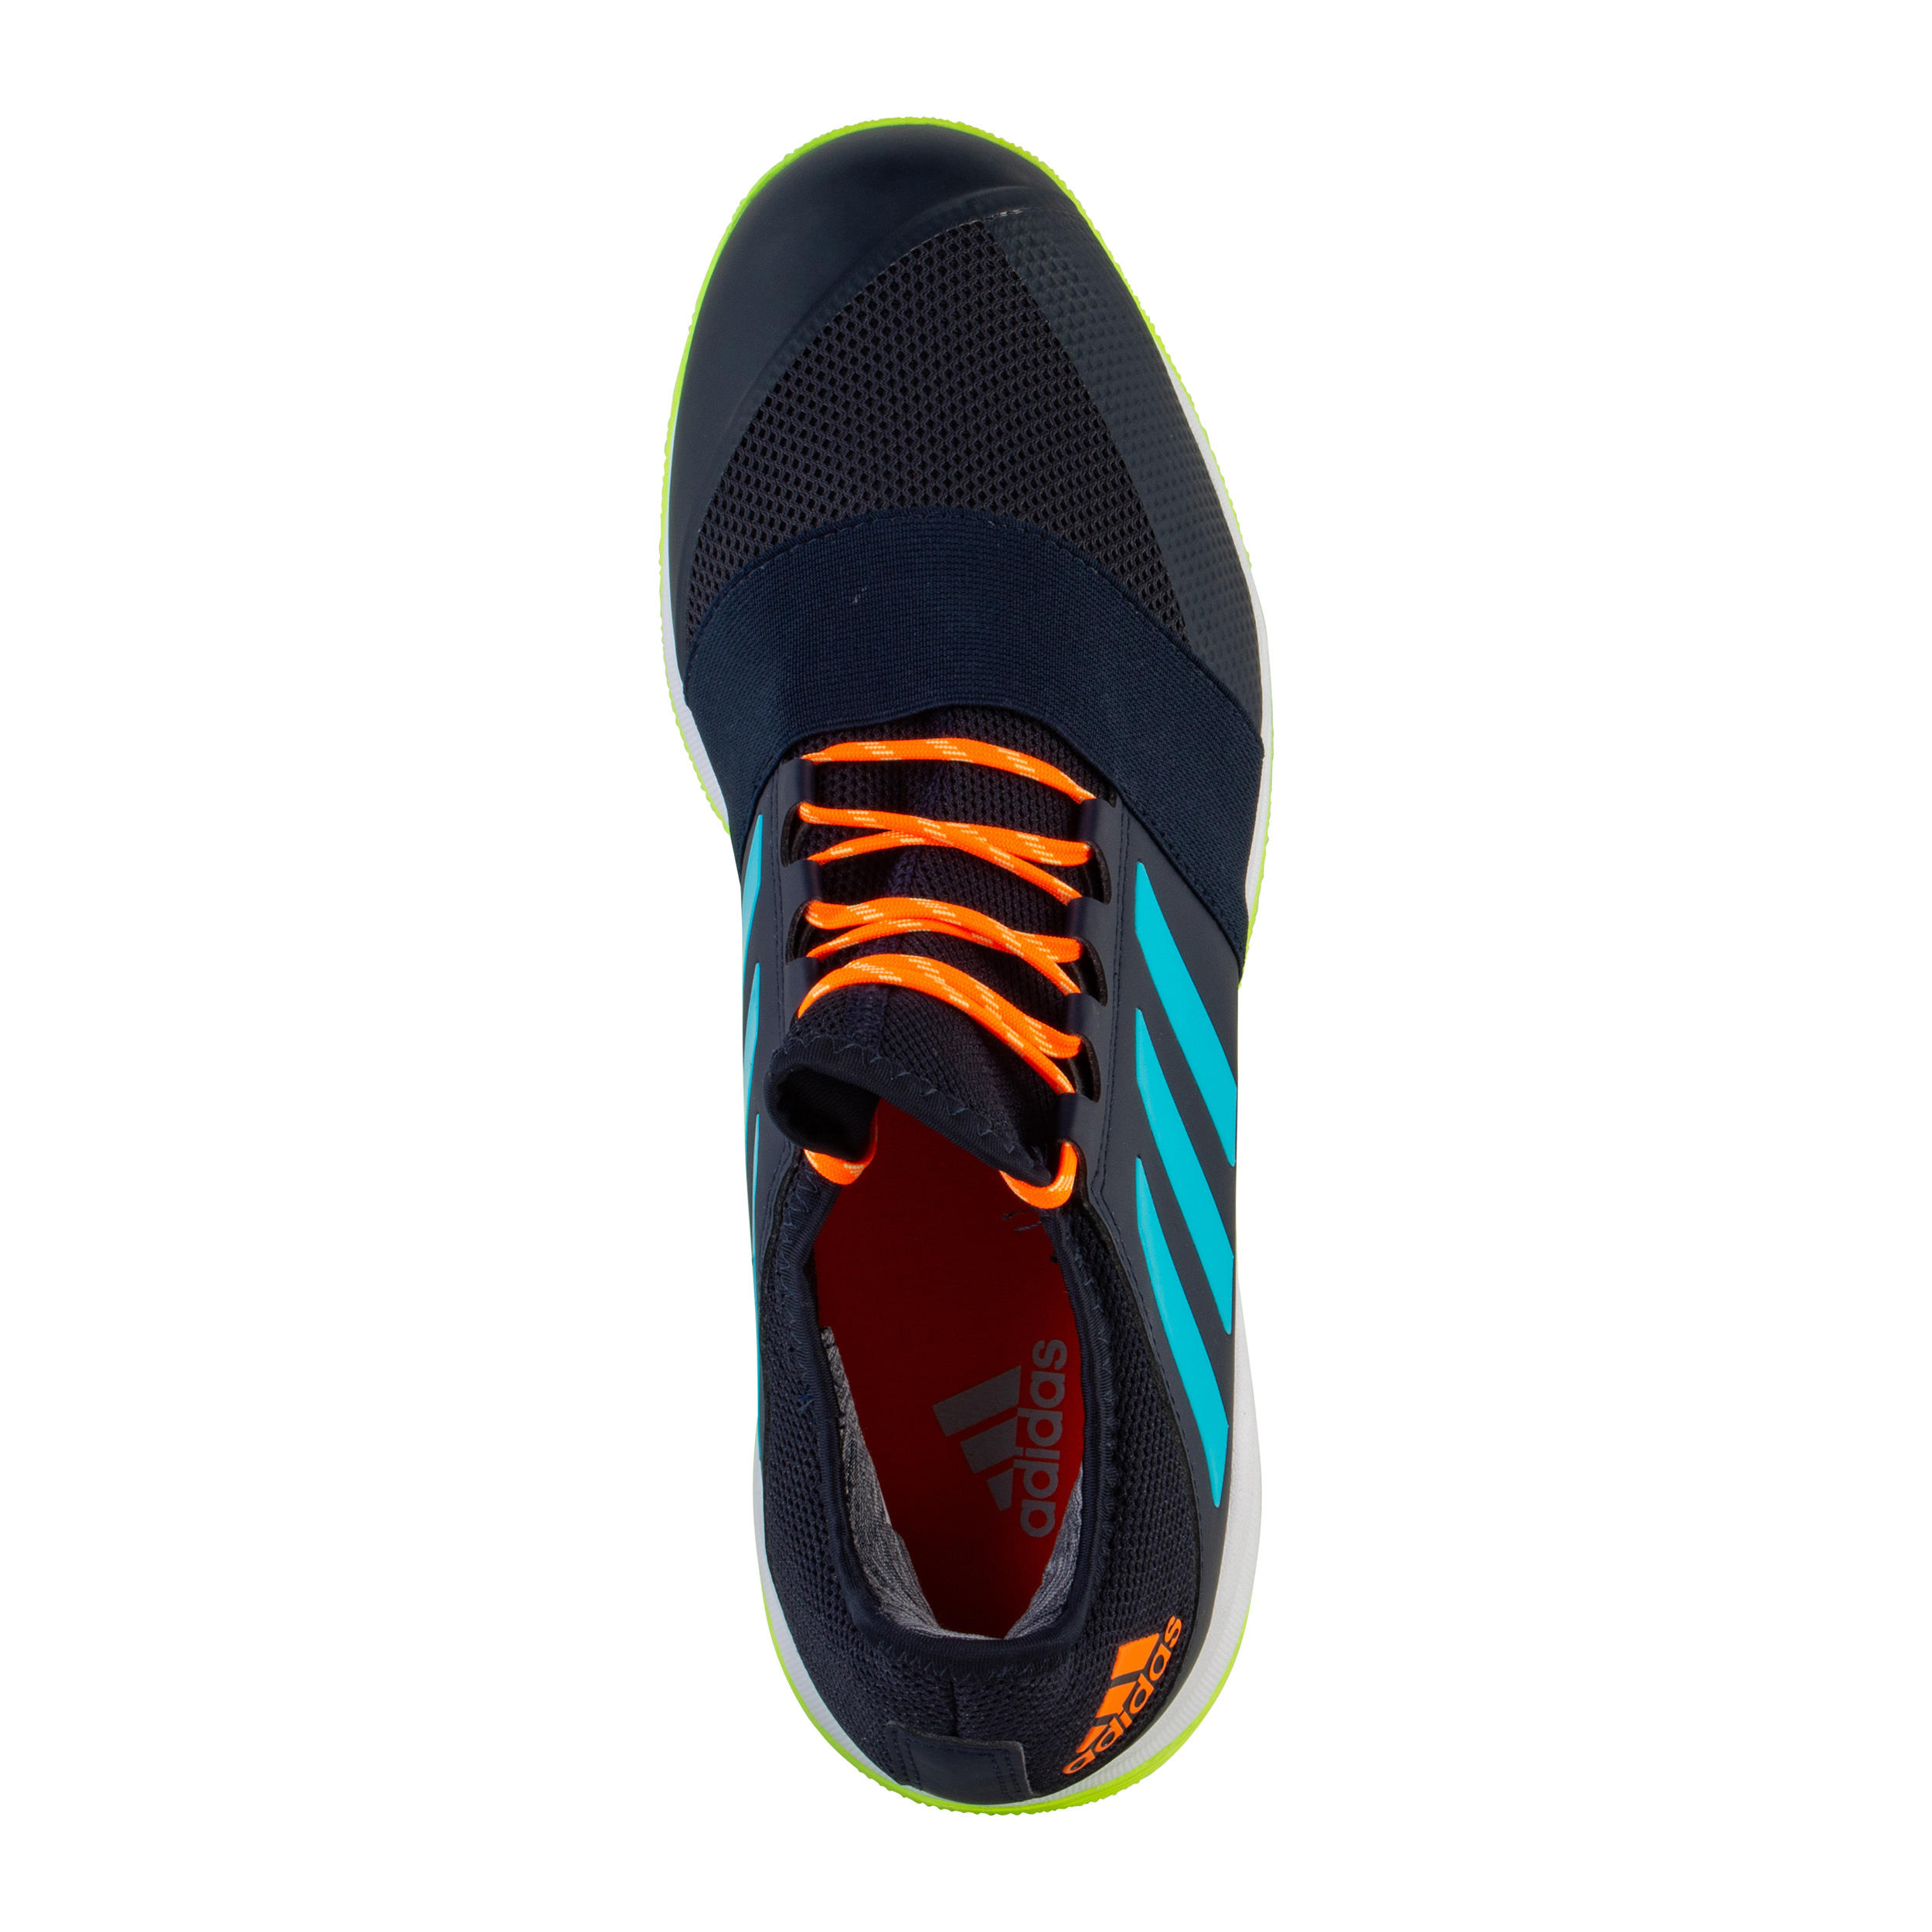 Adult Moderate-Intensity Field Hockey Shoes Divox 1.9S - Navy/Orange 5/7